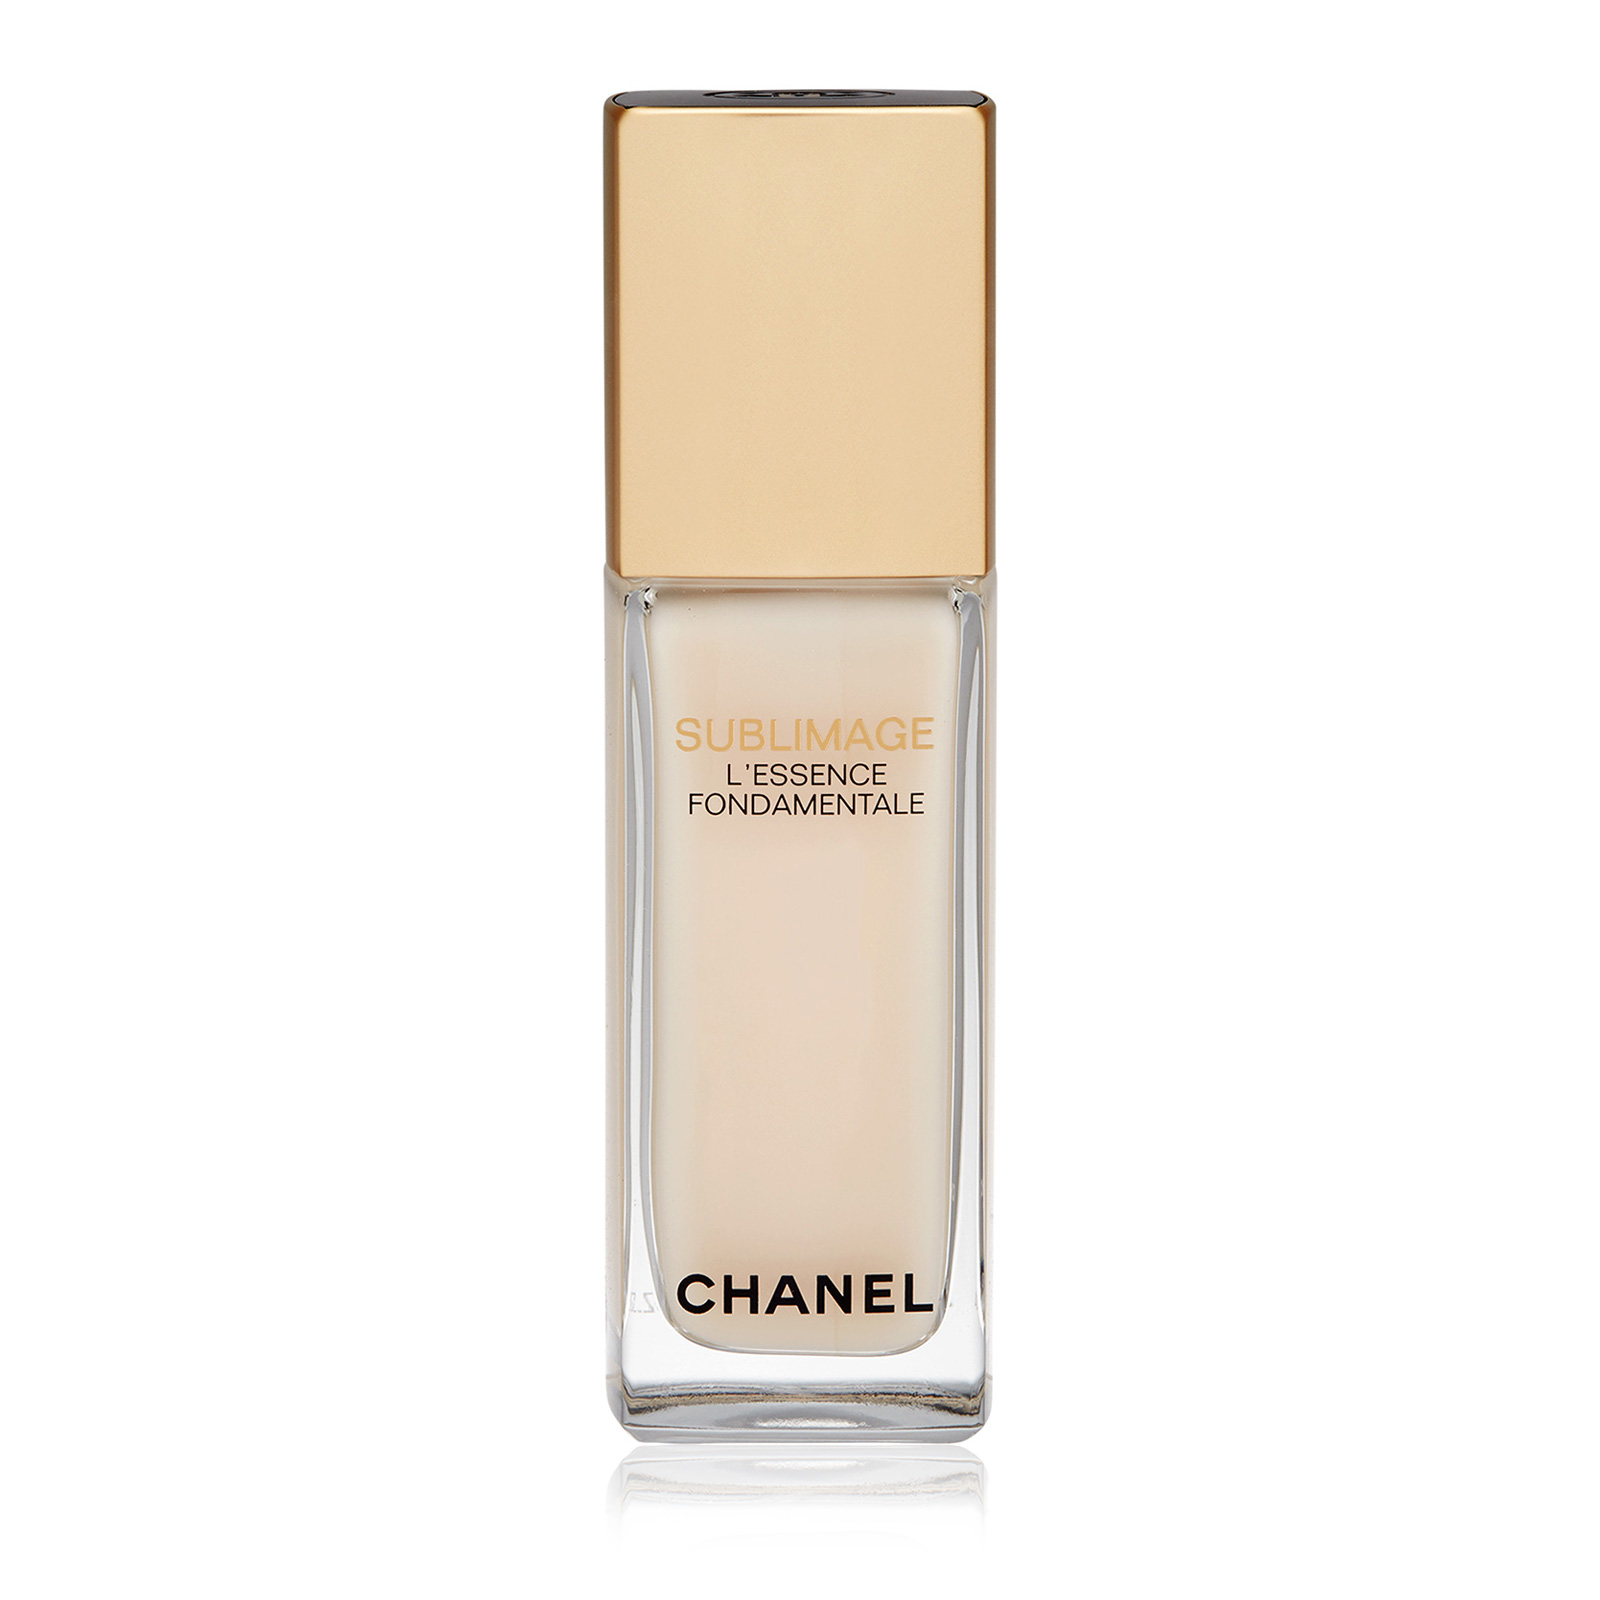 Chanel Sublimage L'Essence Fondamentale Ultimate ml 1.35 oz AKB